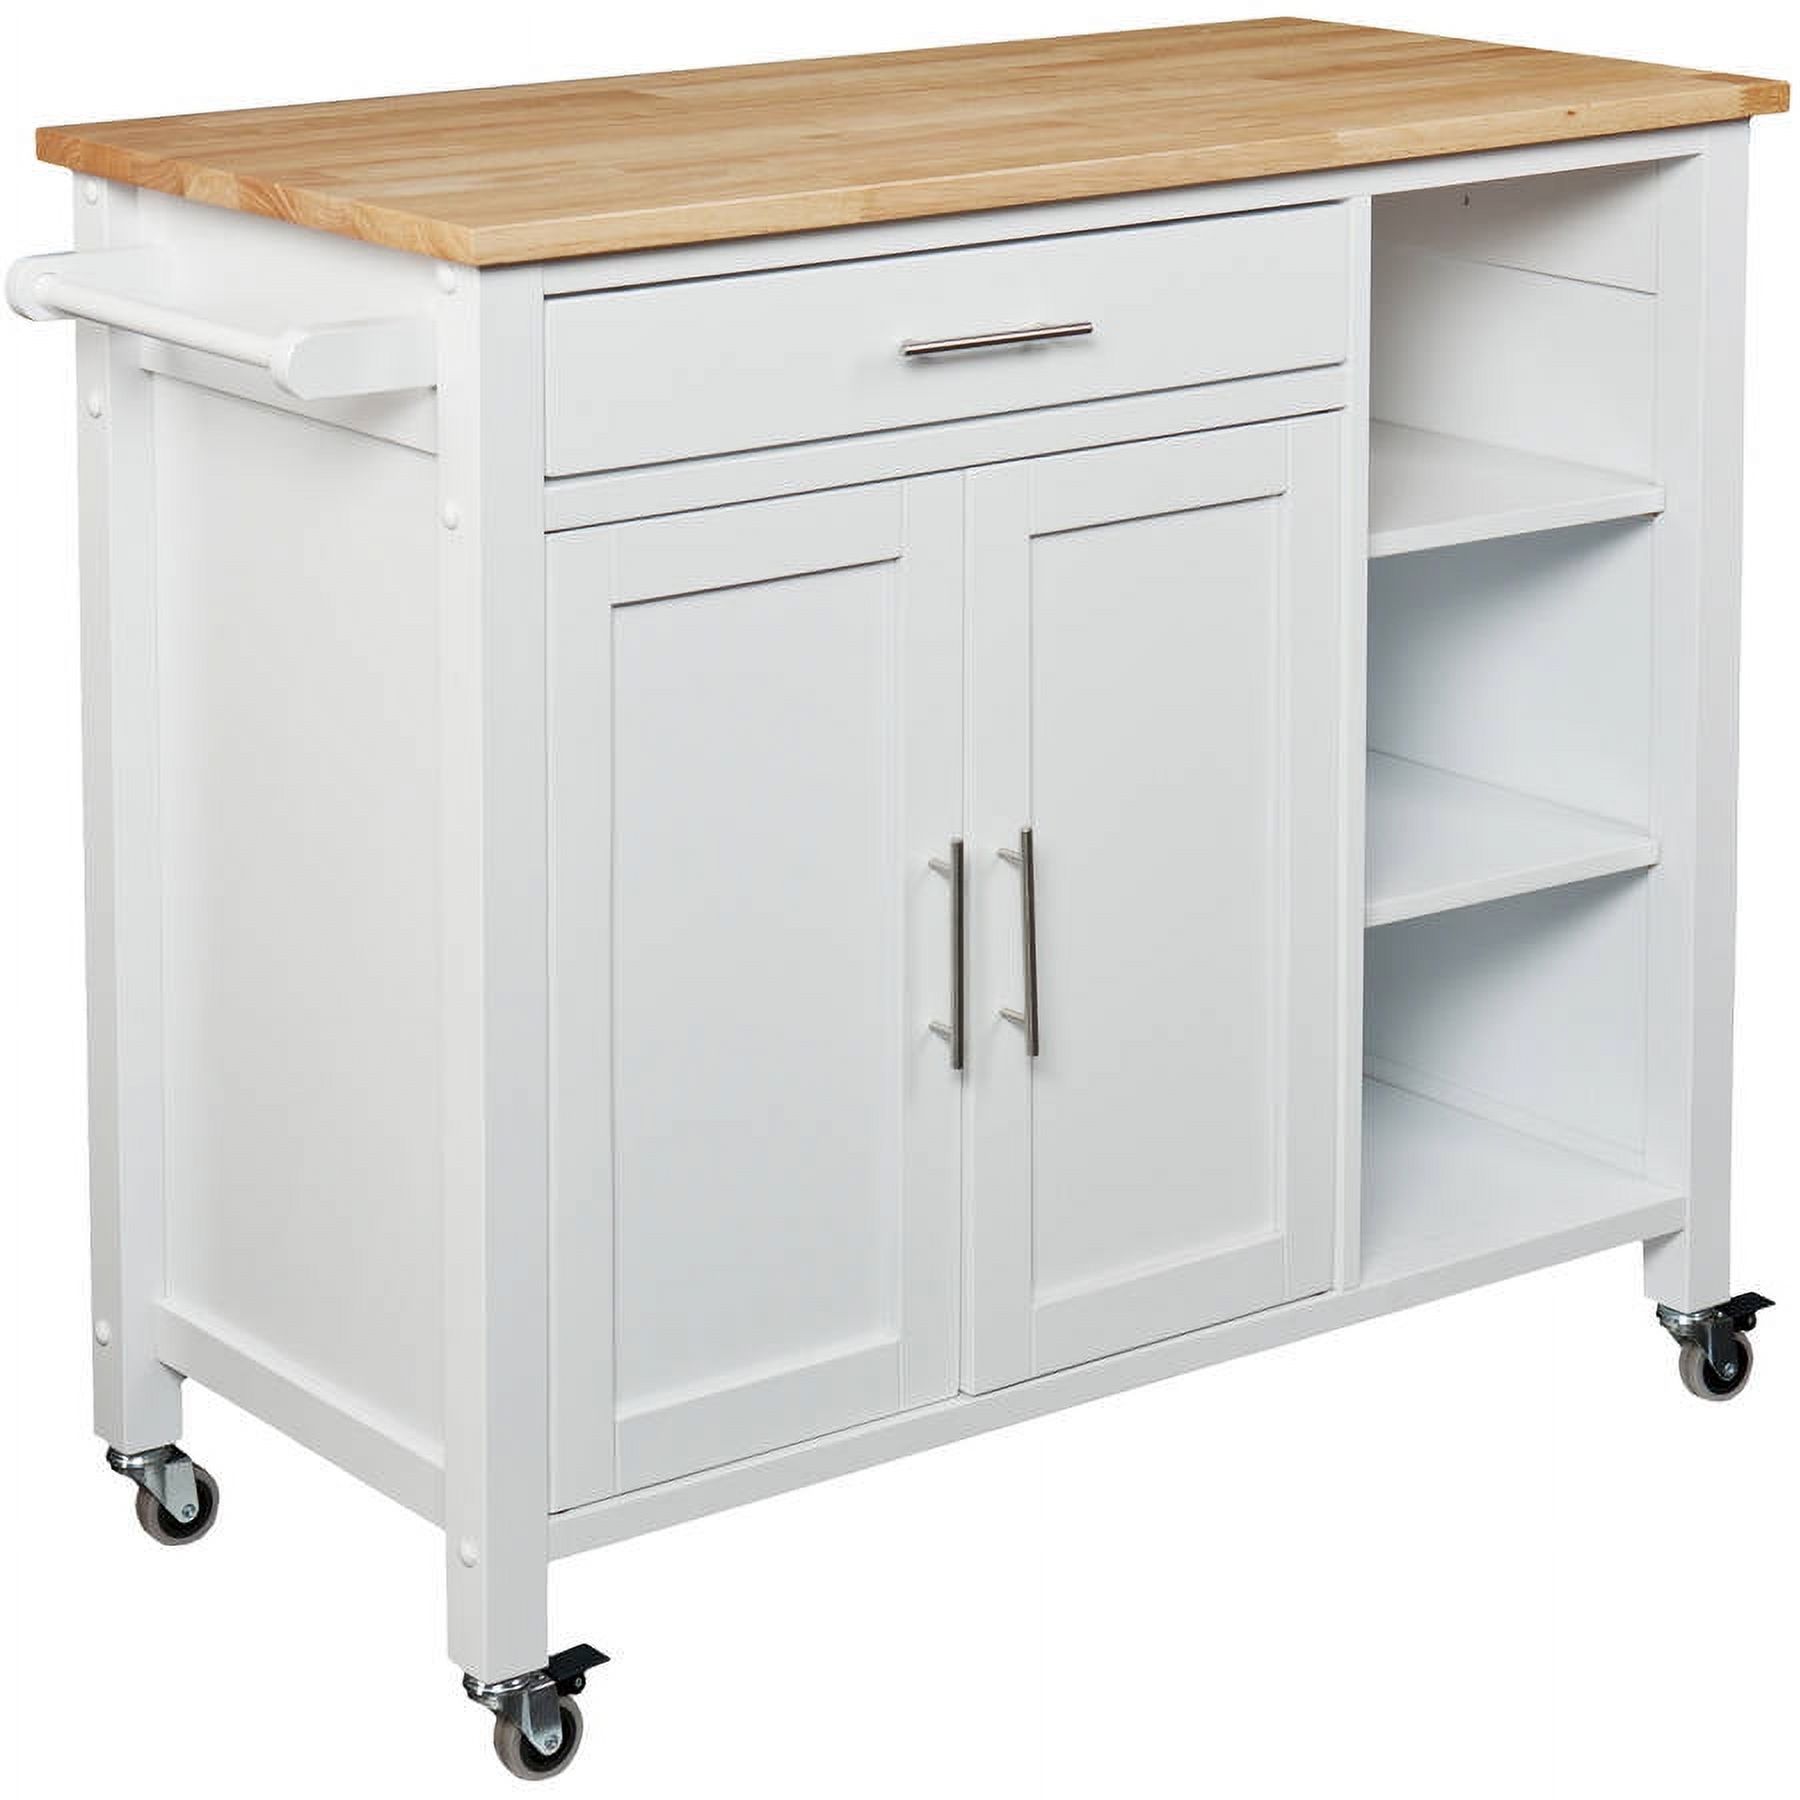 Southern Enterprises Ryland Kitchen Cart, White - image 3 of 5